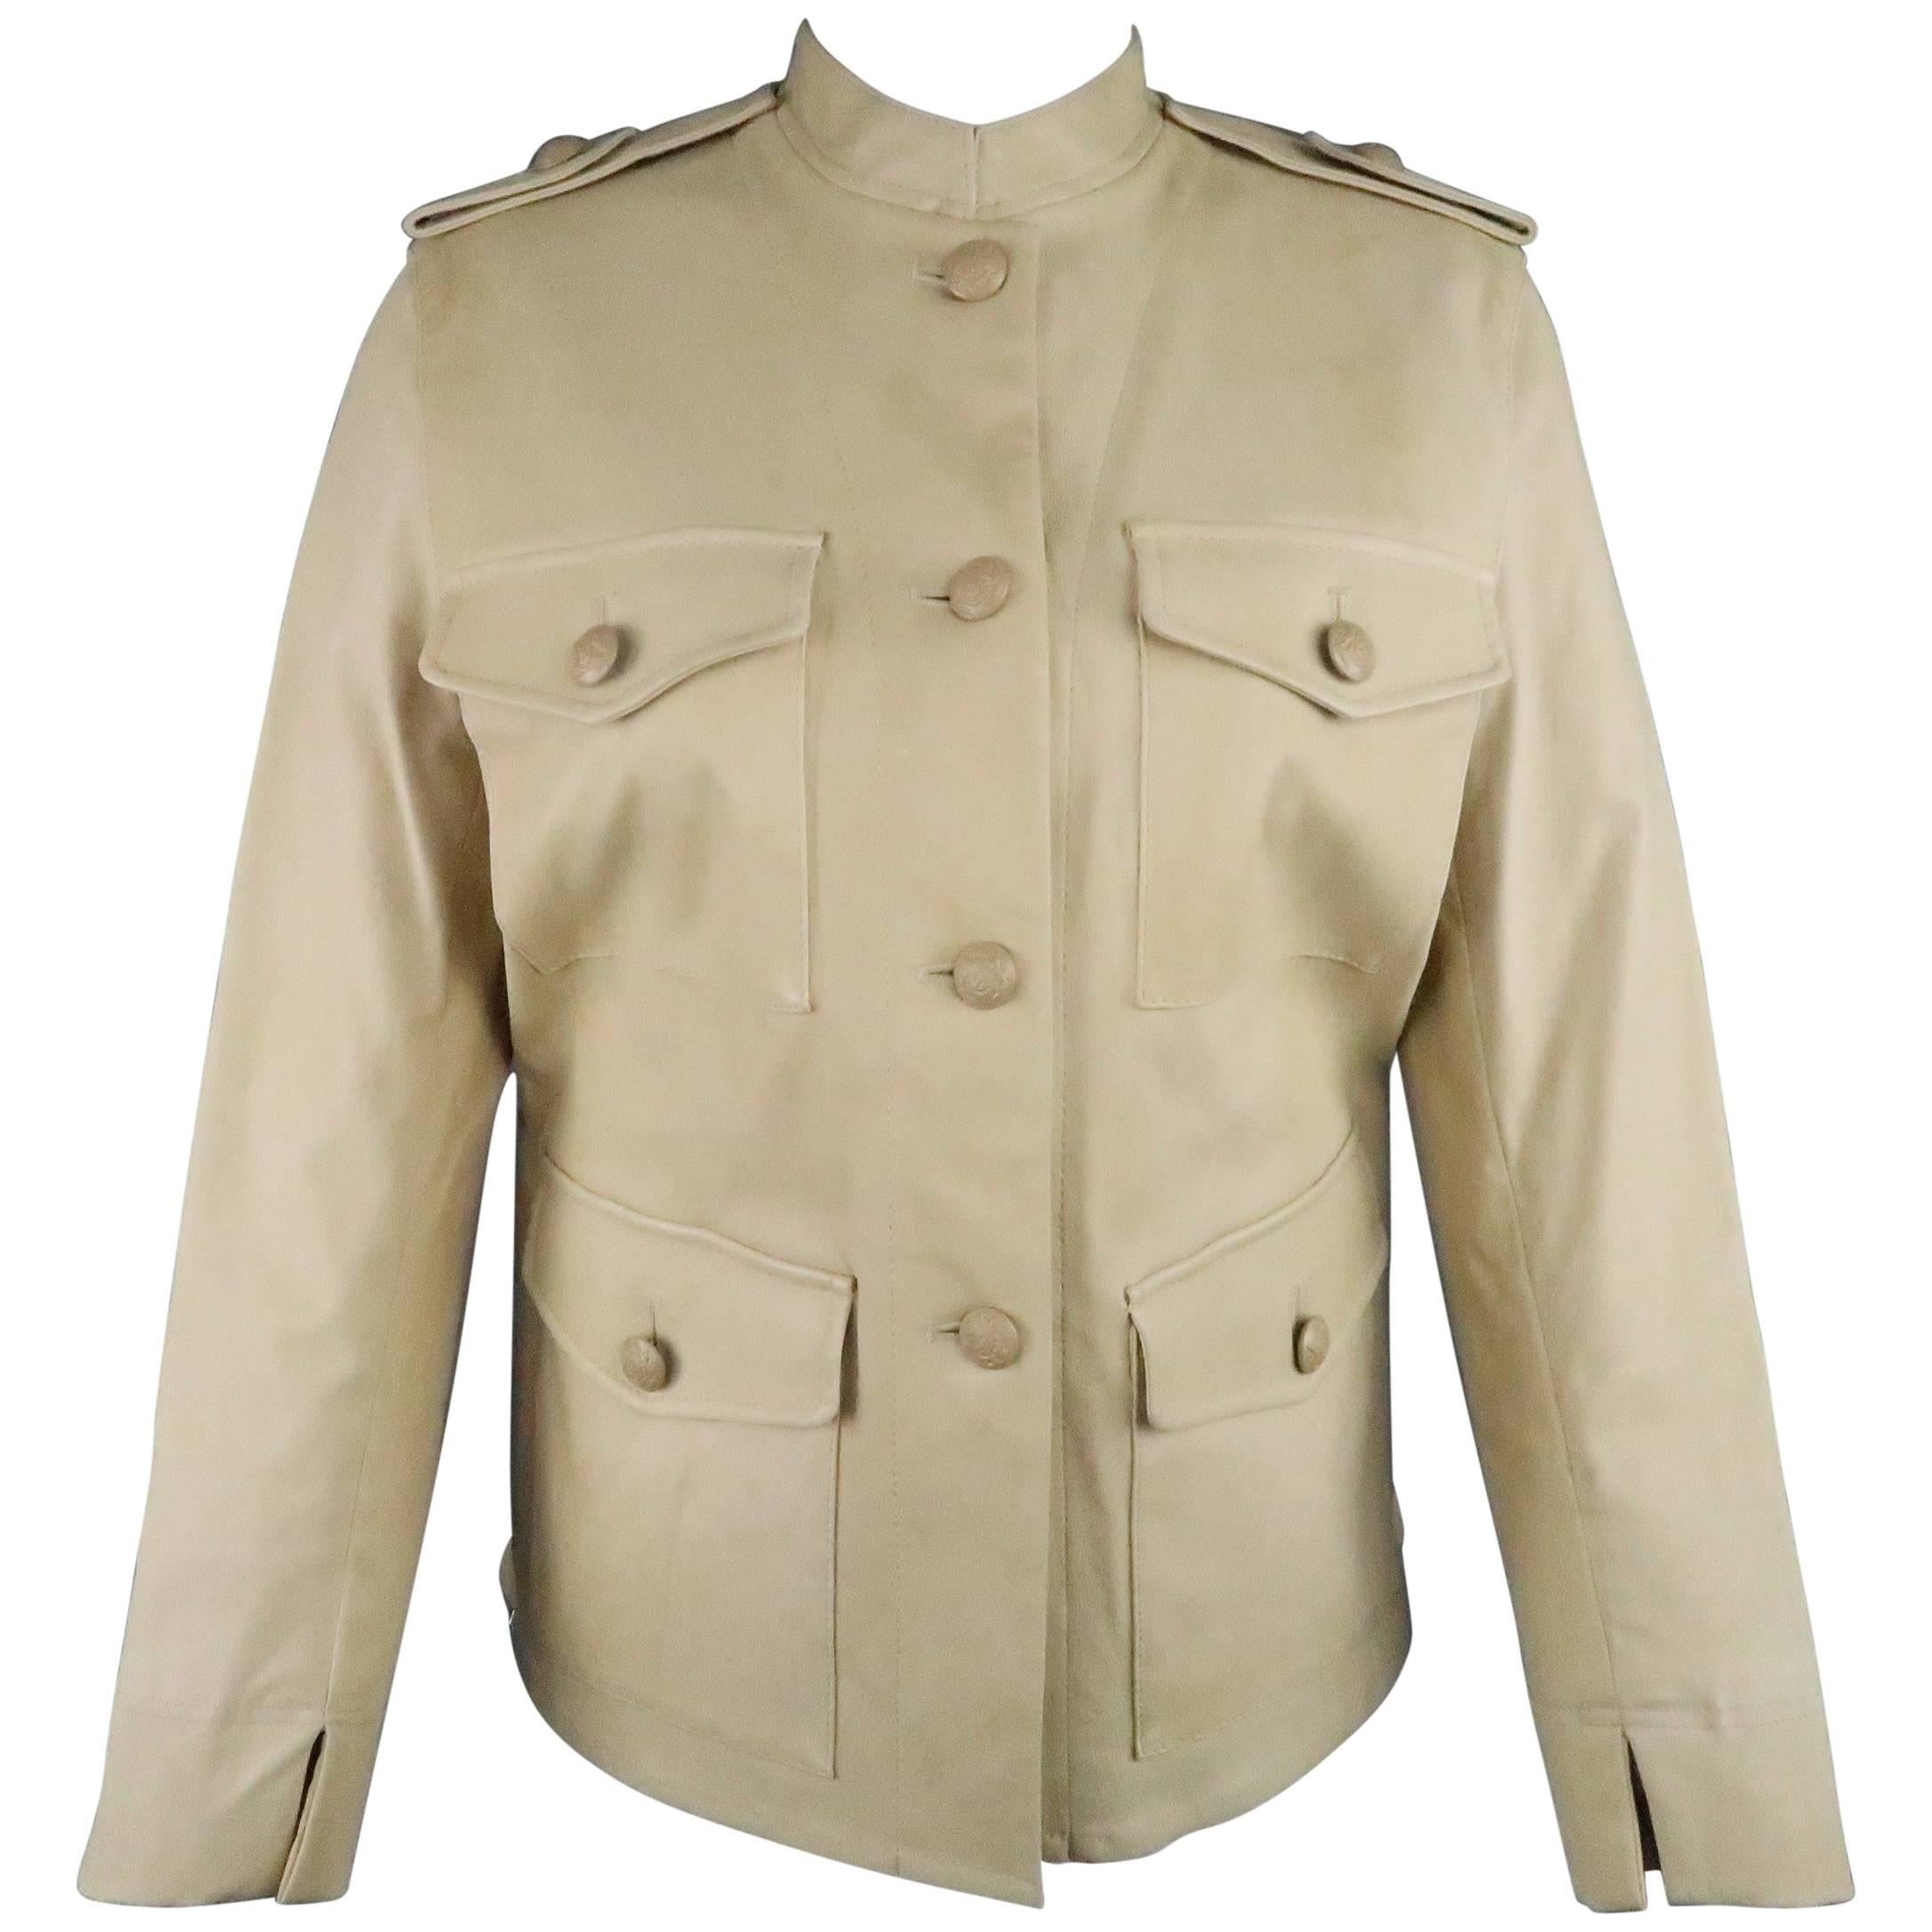 3.1 PHILLIP LIM Size 8 Beige Leather Patch Pocket Safari Jacket